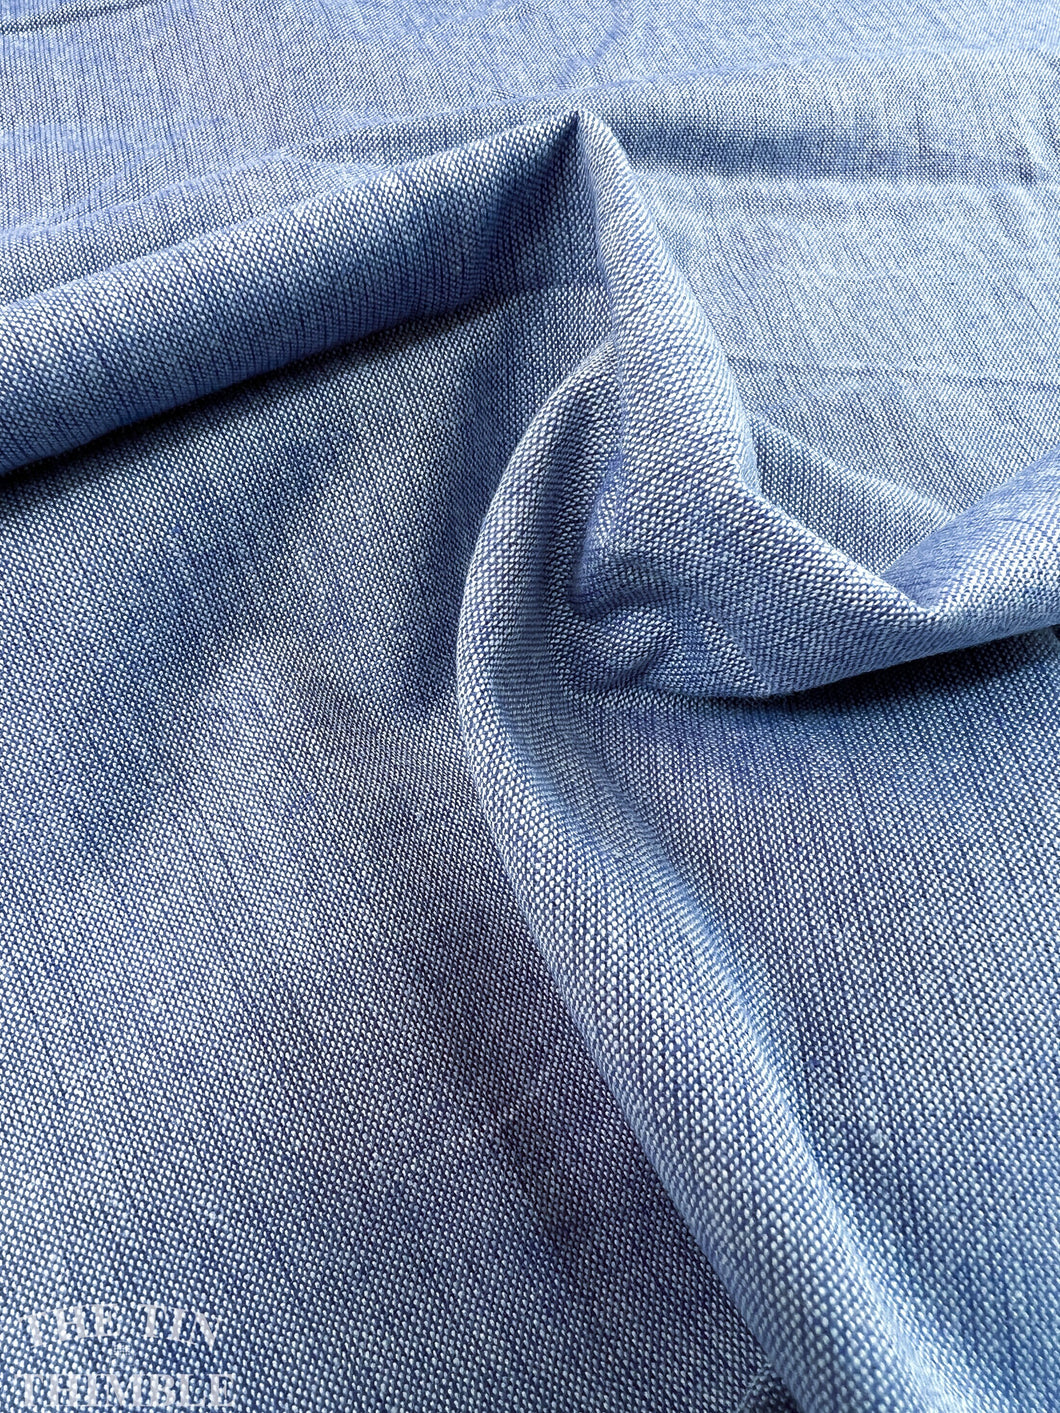 Blue Chambray Fabric - 100% Cotton - 58